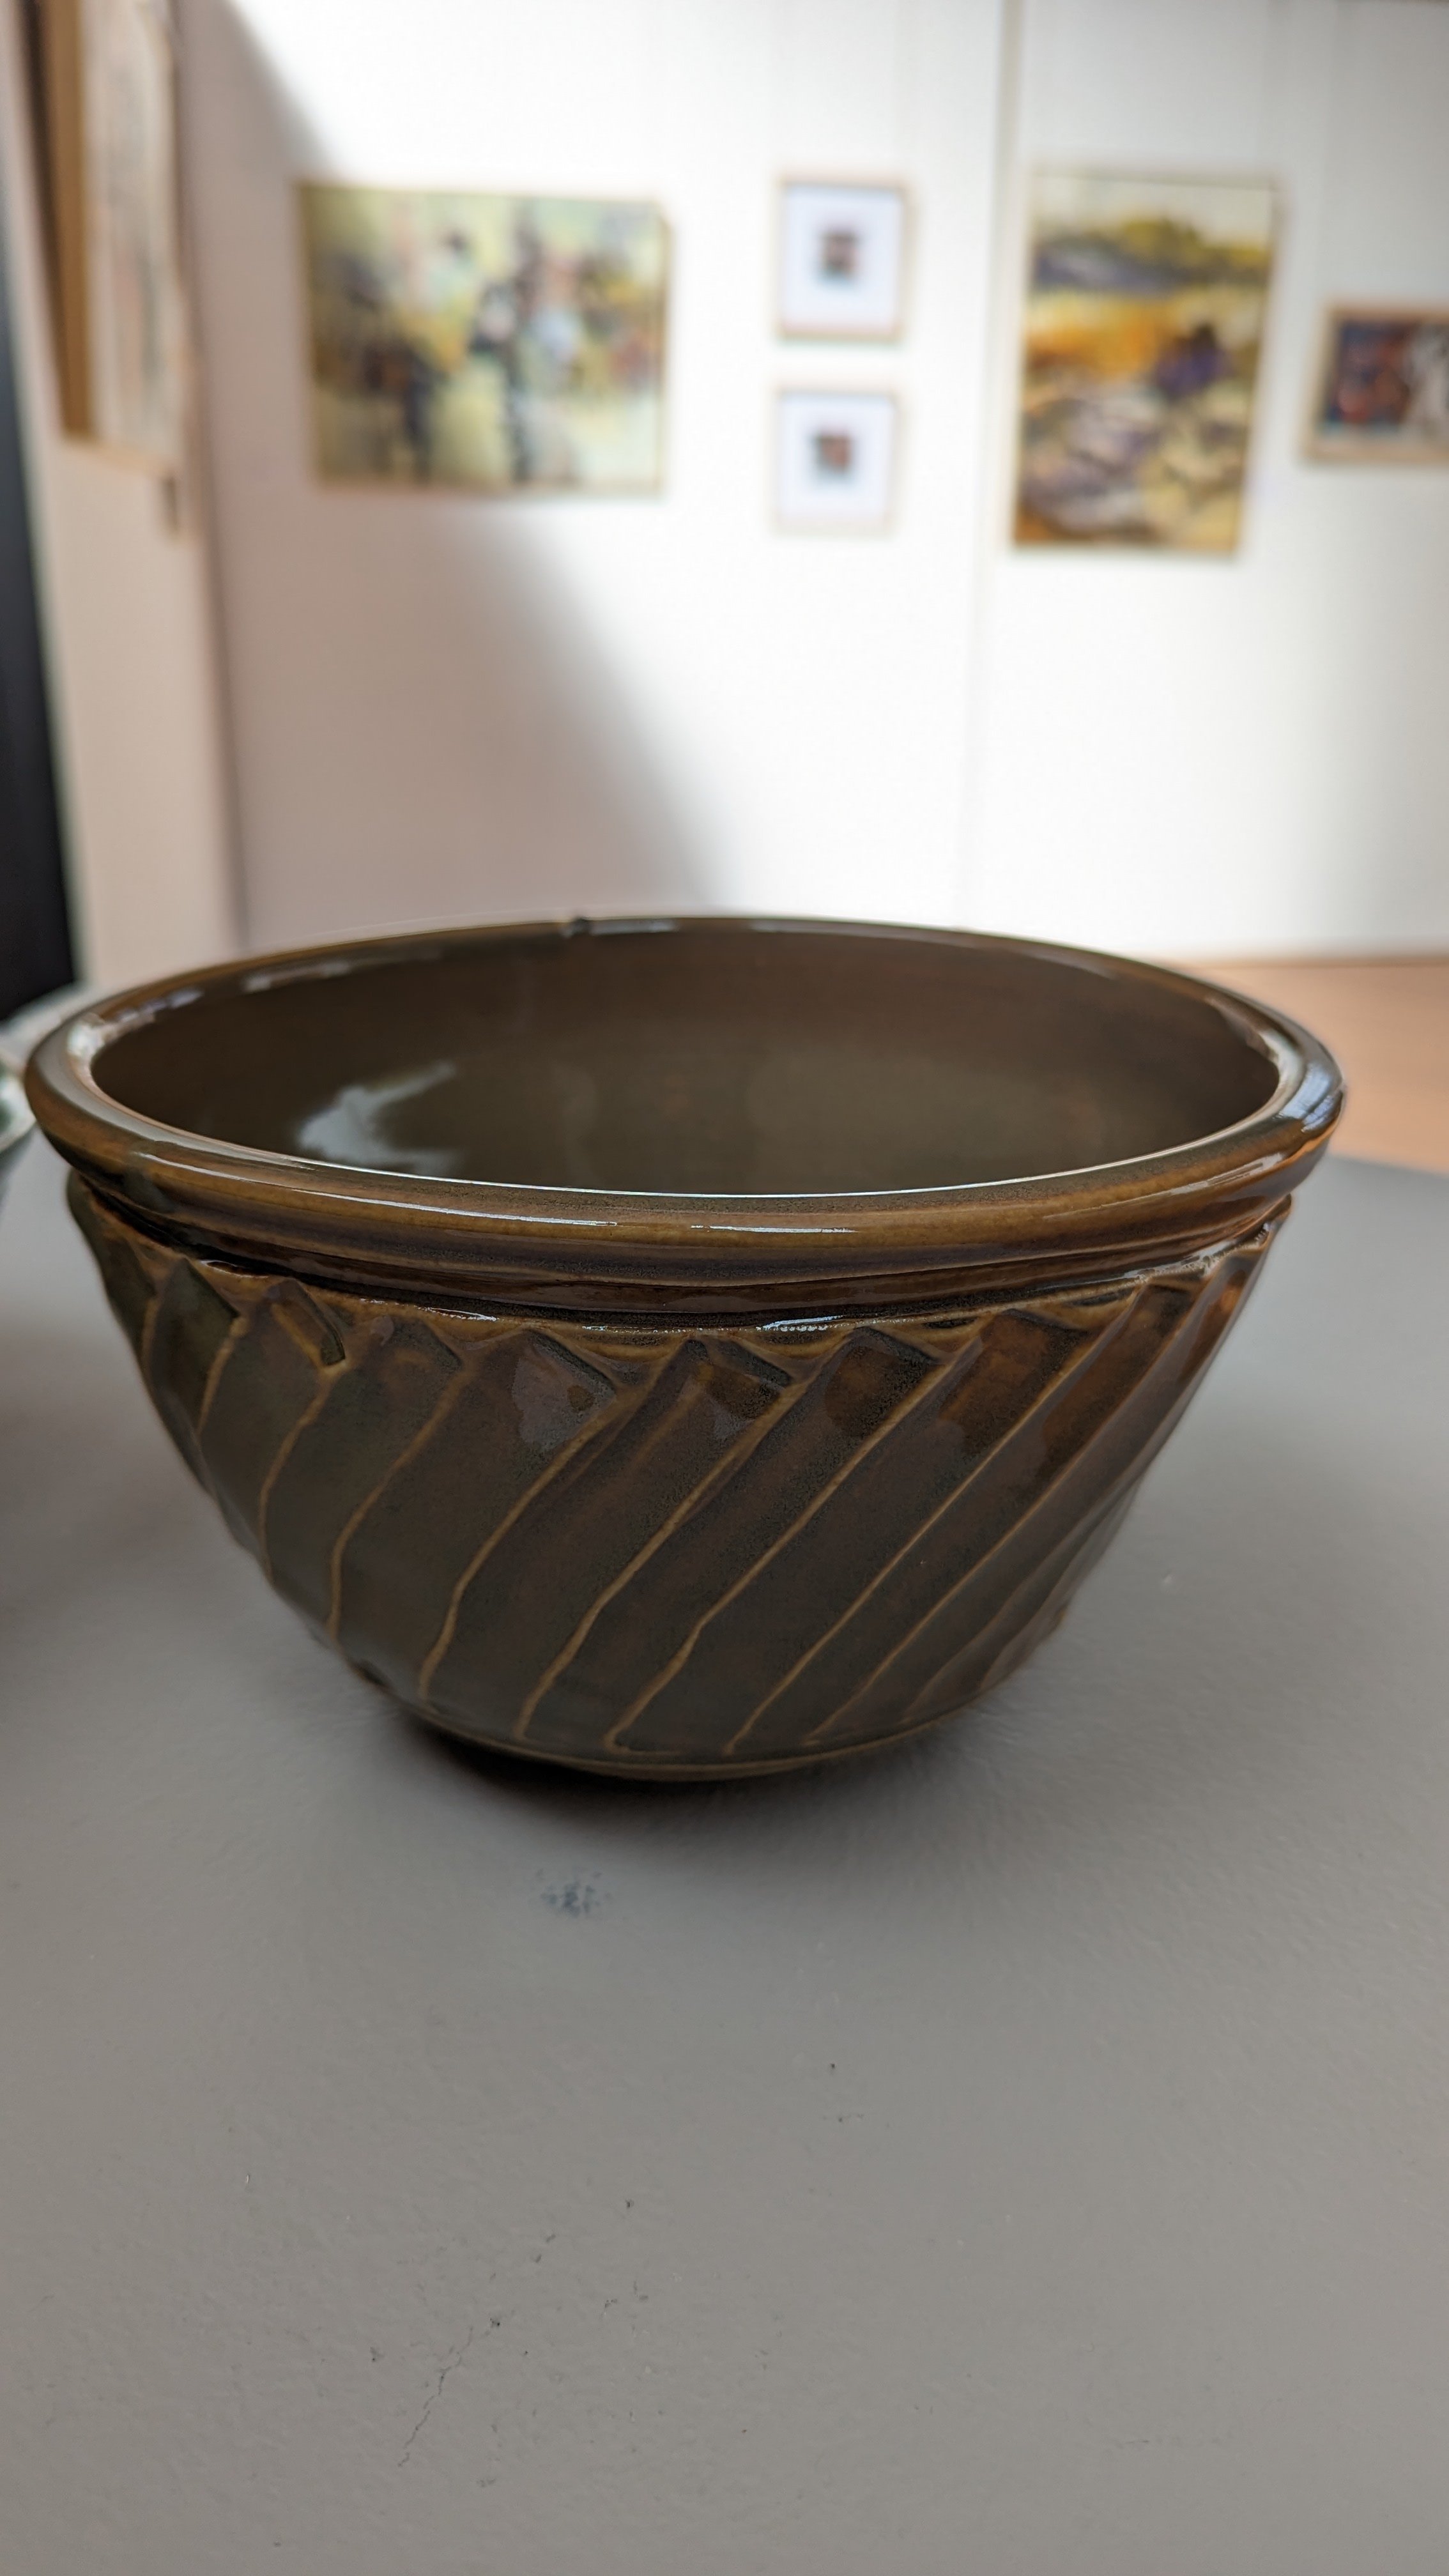 Olive Carved Bowl by Dianne Whitford.jpg